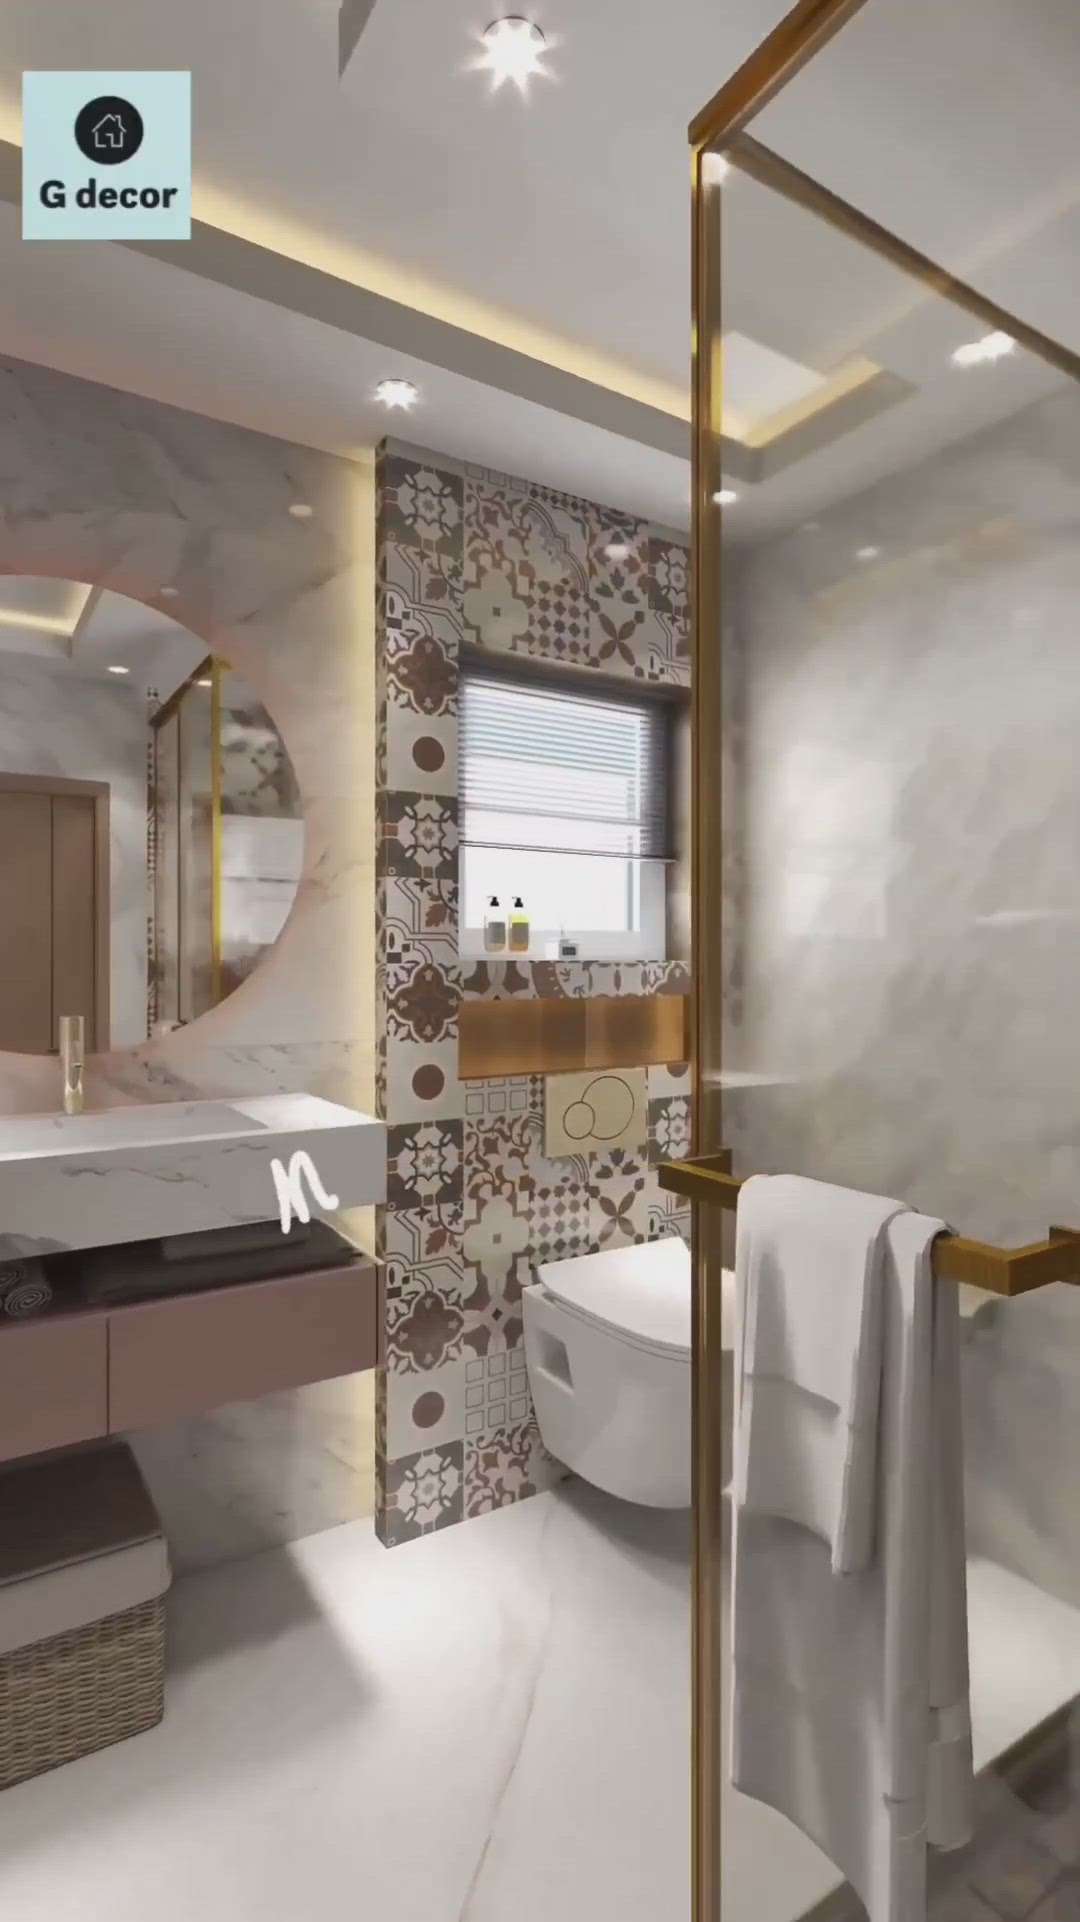 latest bathroom design
#InteriorDesigner #interiordecoration #BathroomDesigns #BathroomTIles #BathroomIdeas #BathroomRenovation